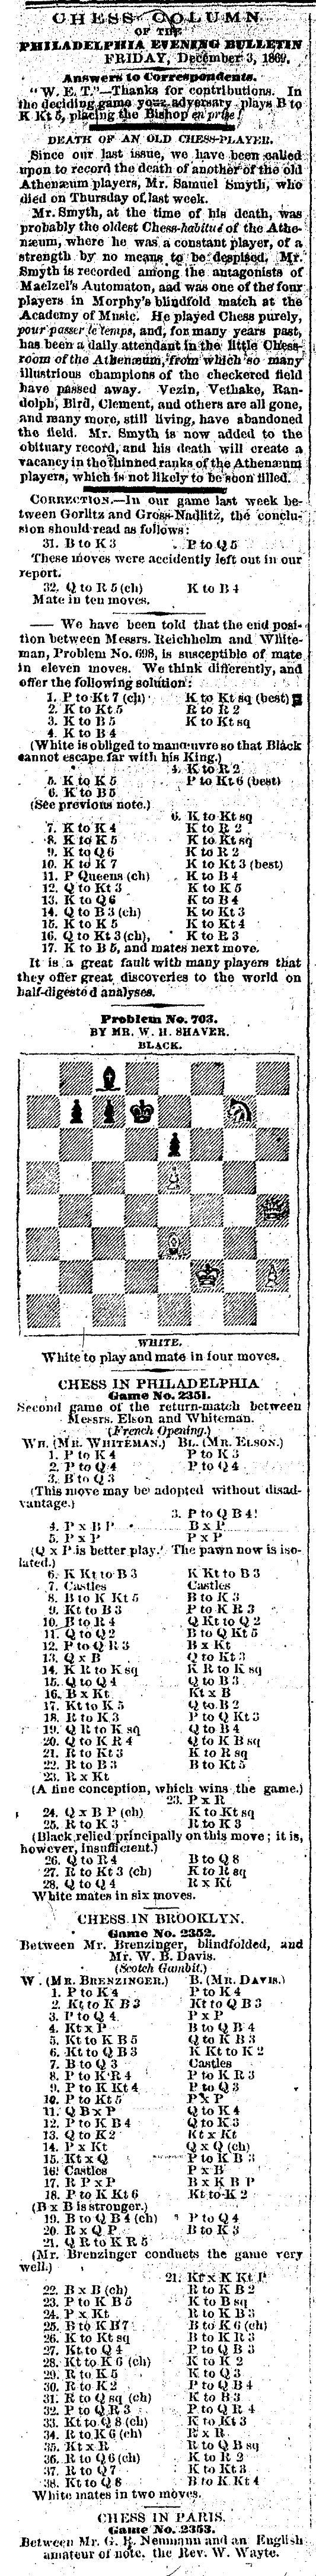 1869.12.03-01 Philadelphia Daily Evening Bulletin.jpg